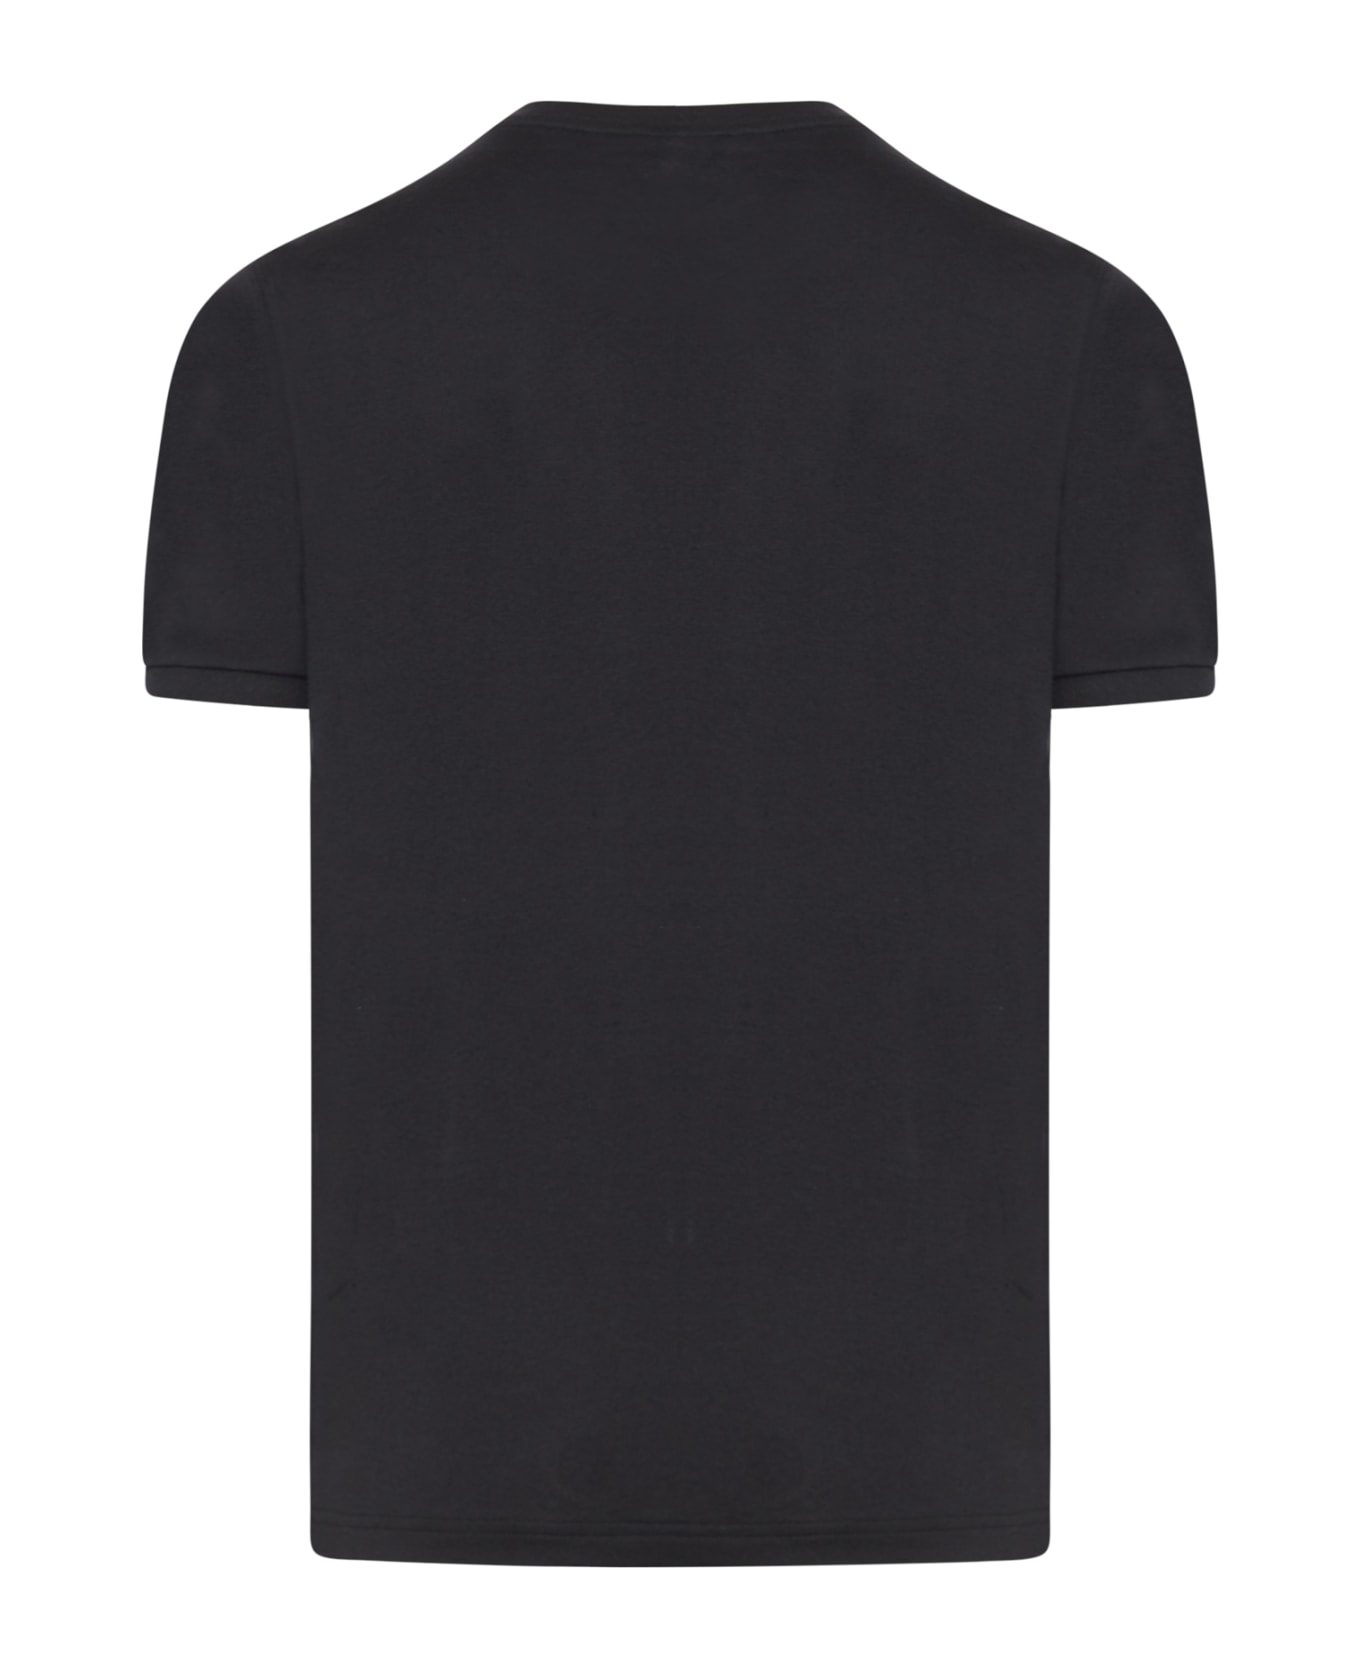 Paul&Shark T-shirt Cotton - Black